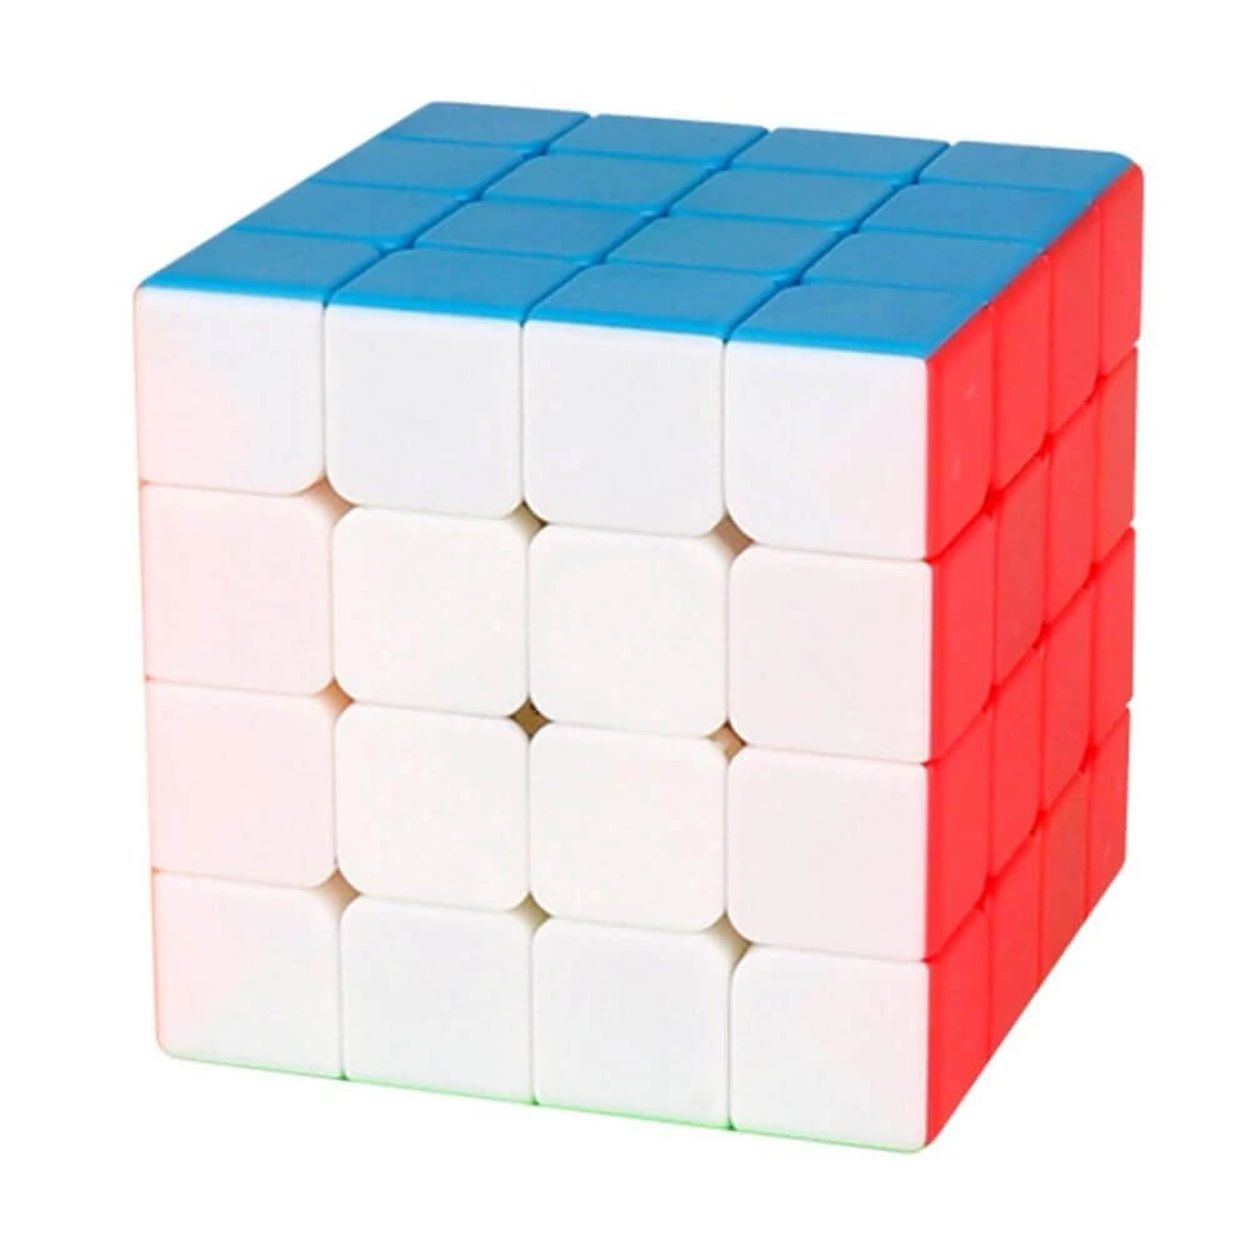 Cubo Magico Profissional Moyu Com Adesivo 4x4x4